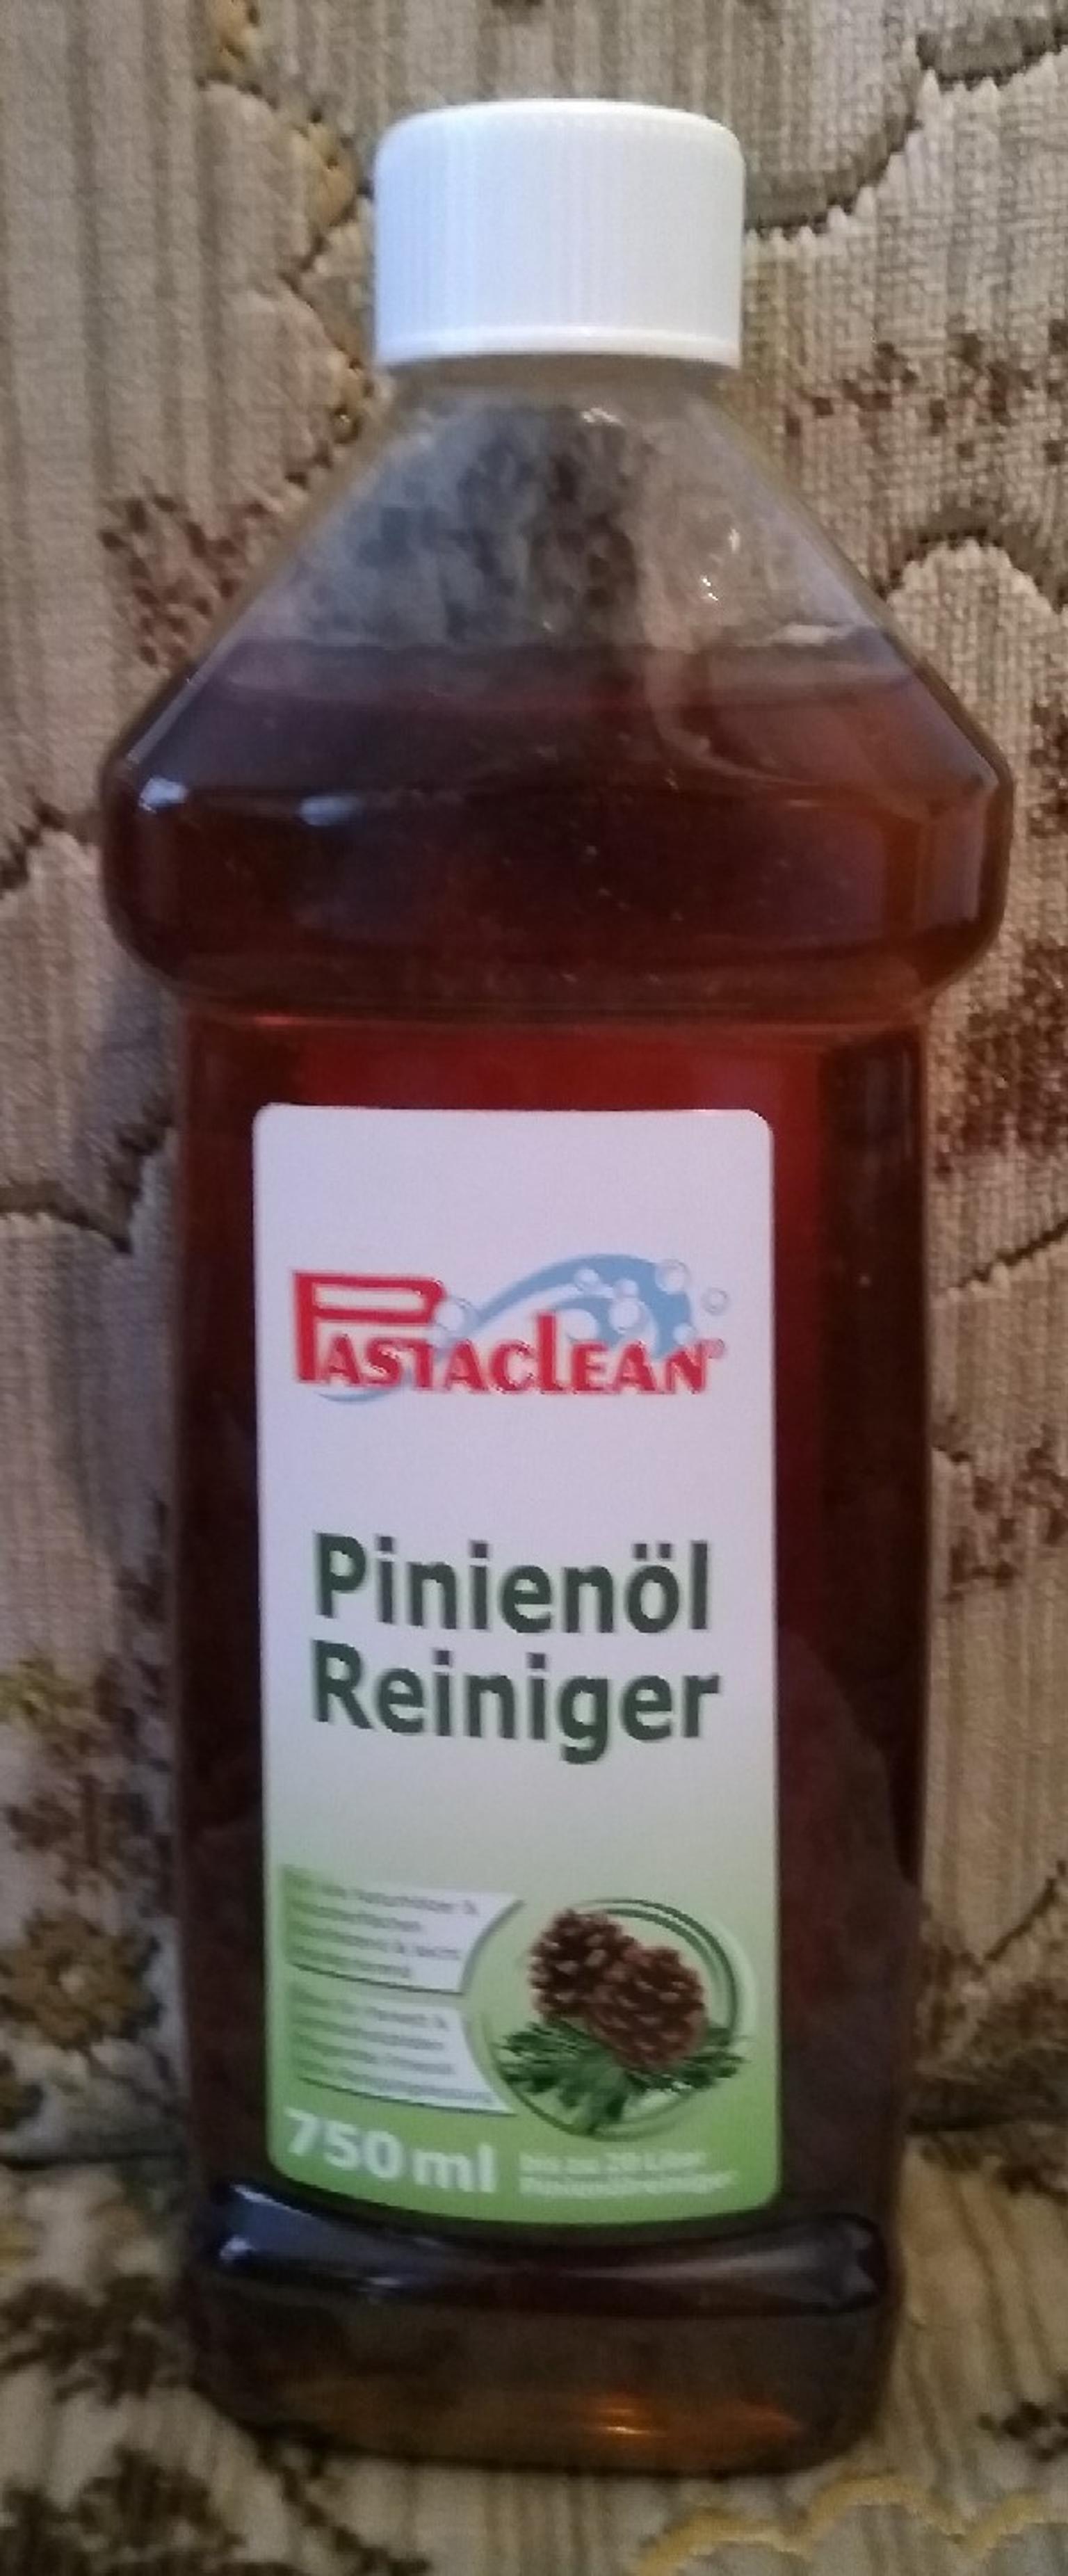 Pastaclean Pinienol Reiniger